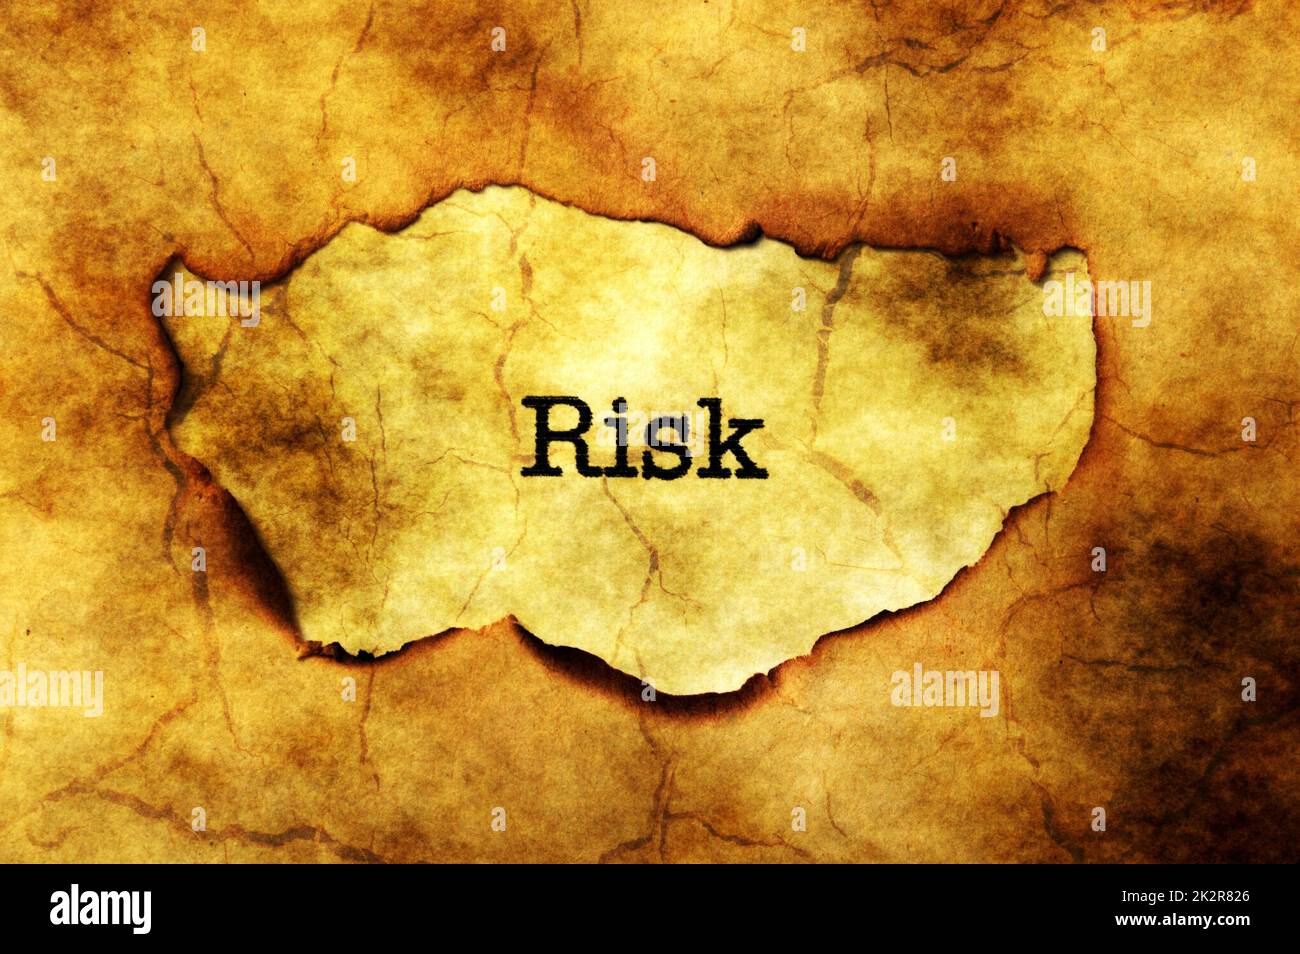 Risk concept Stock Photo